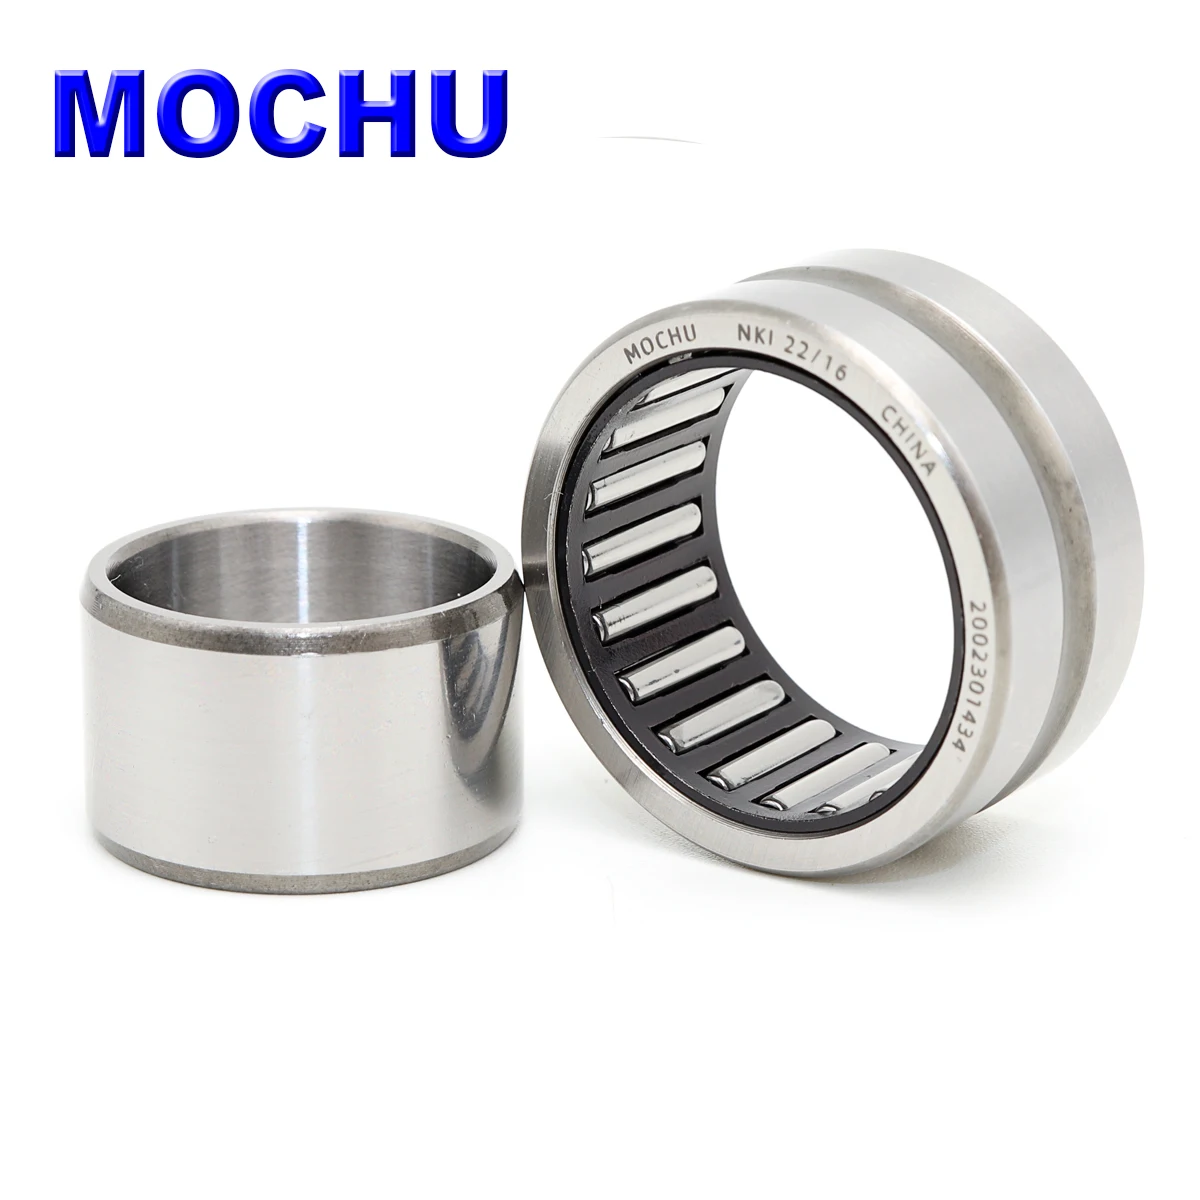 

1PCS NKI22/16 NKI 22/16 22X34X16 NKI2216 MOCHU Needle roller bearings With machined rings With an inner ring